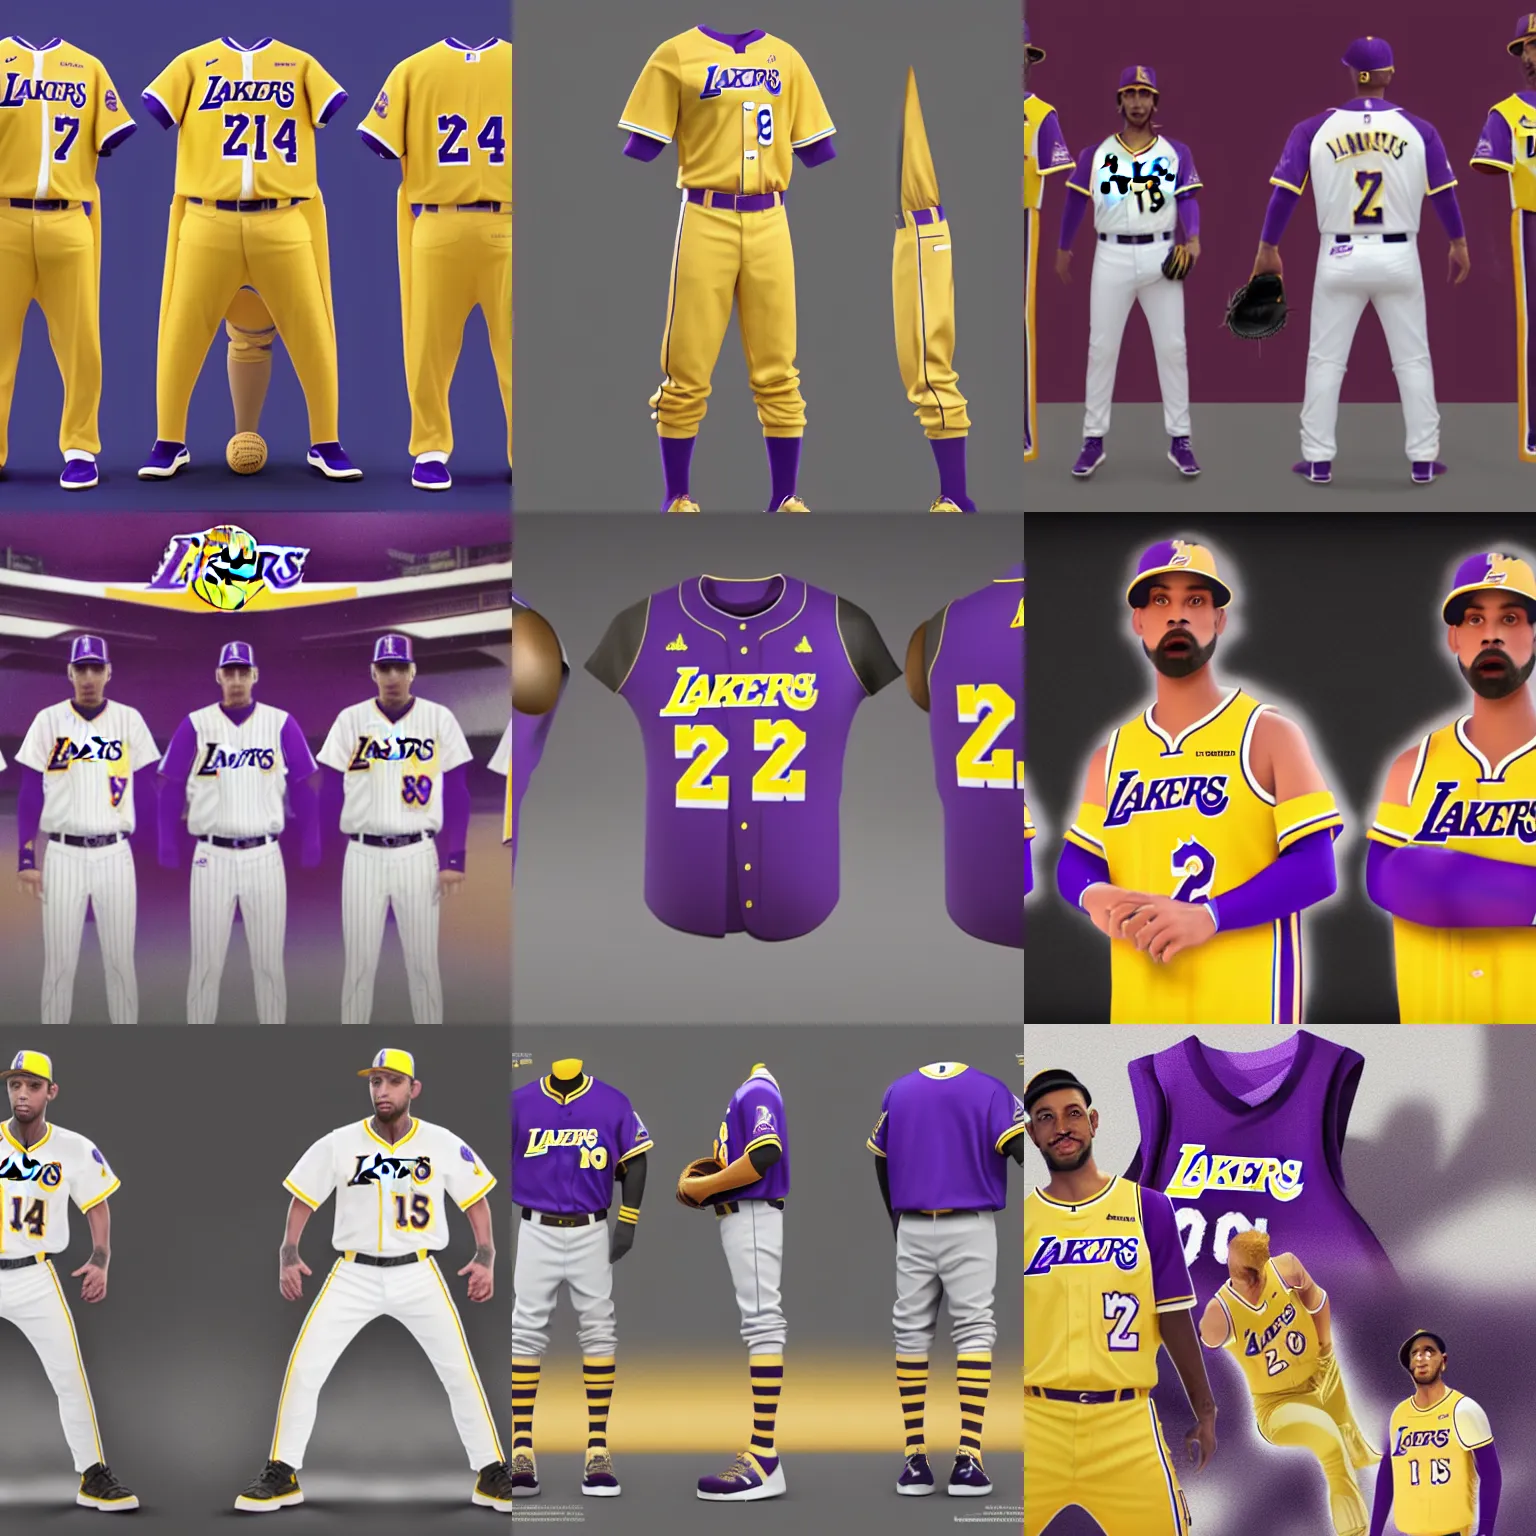 Prompt: los angeles lakers baseball uniform, concept art, octane render